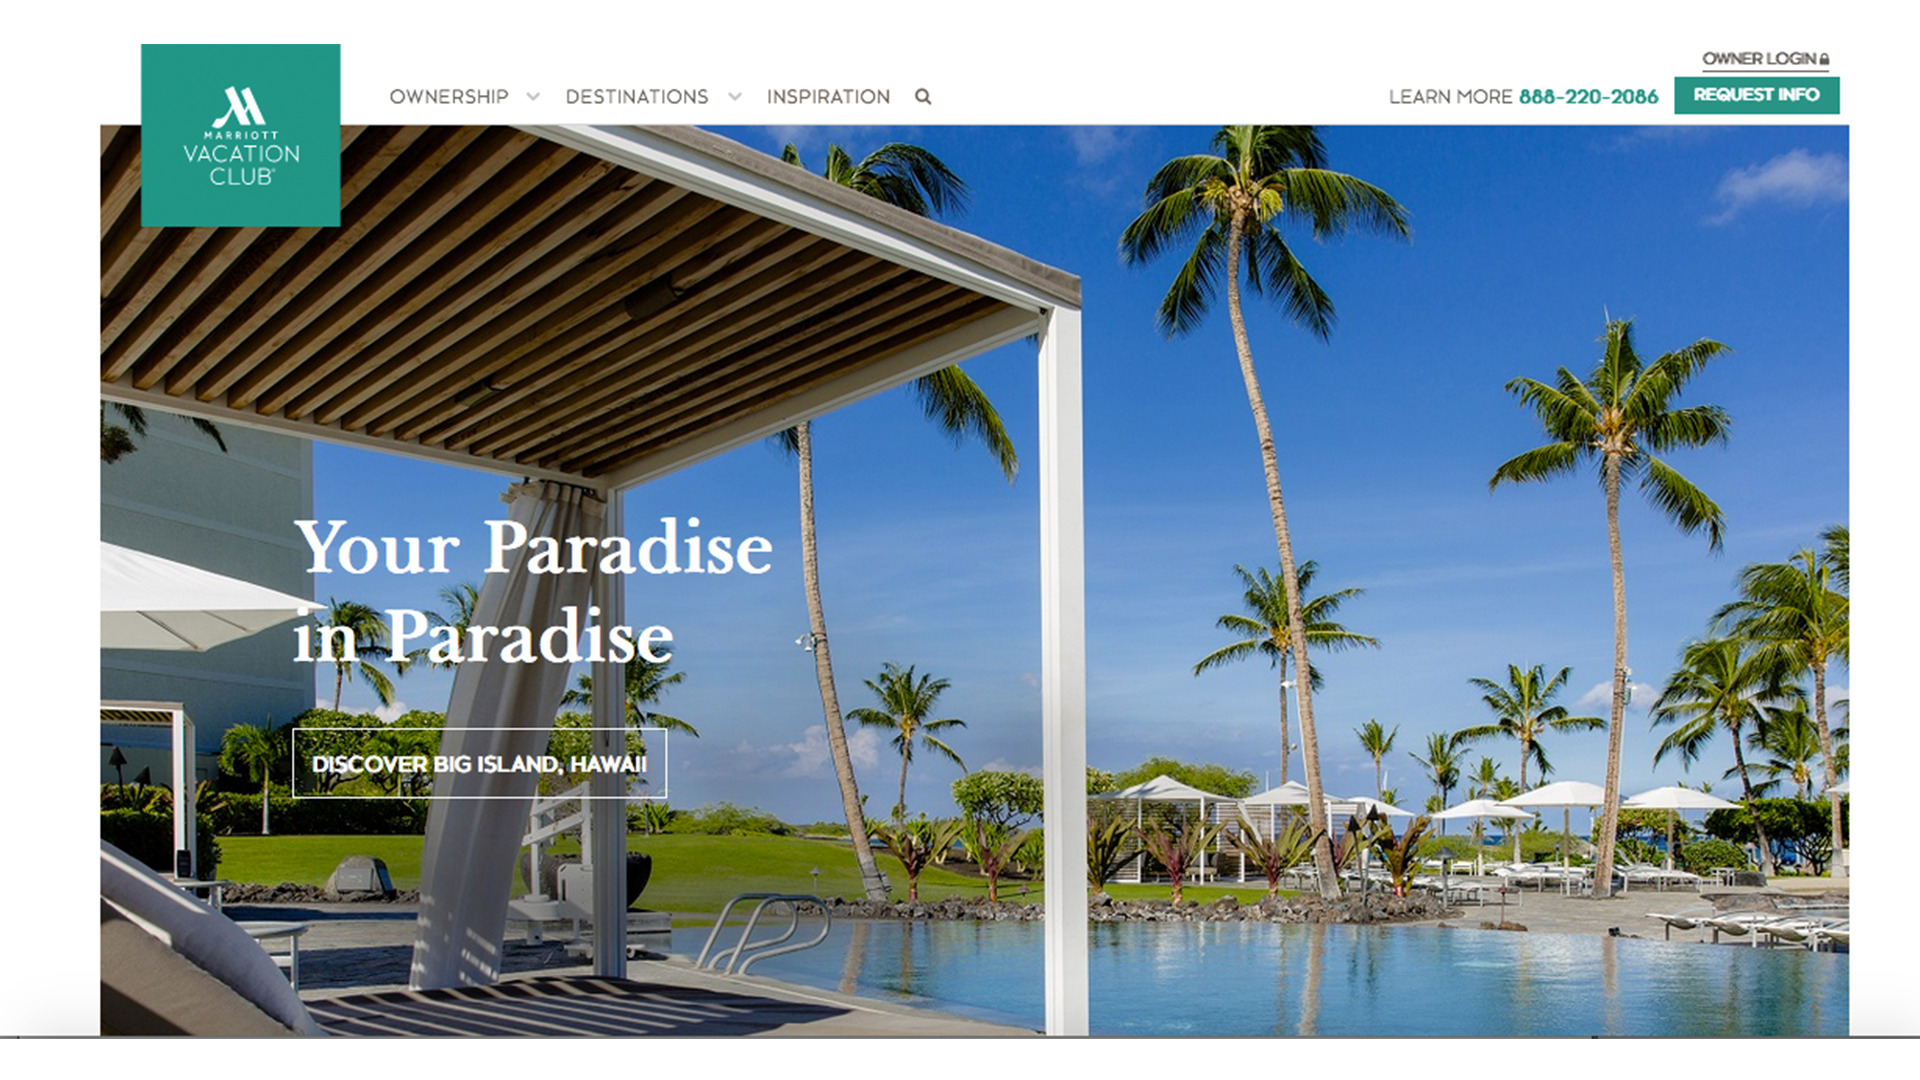 Marriott vacation club portfolio